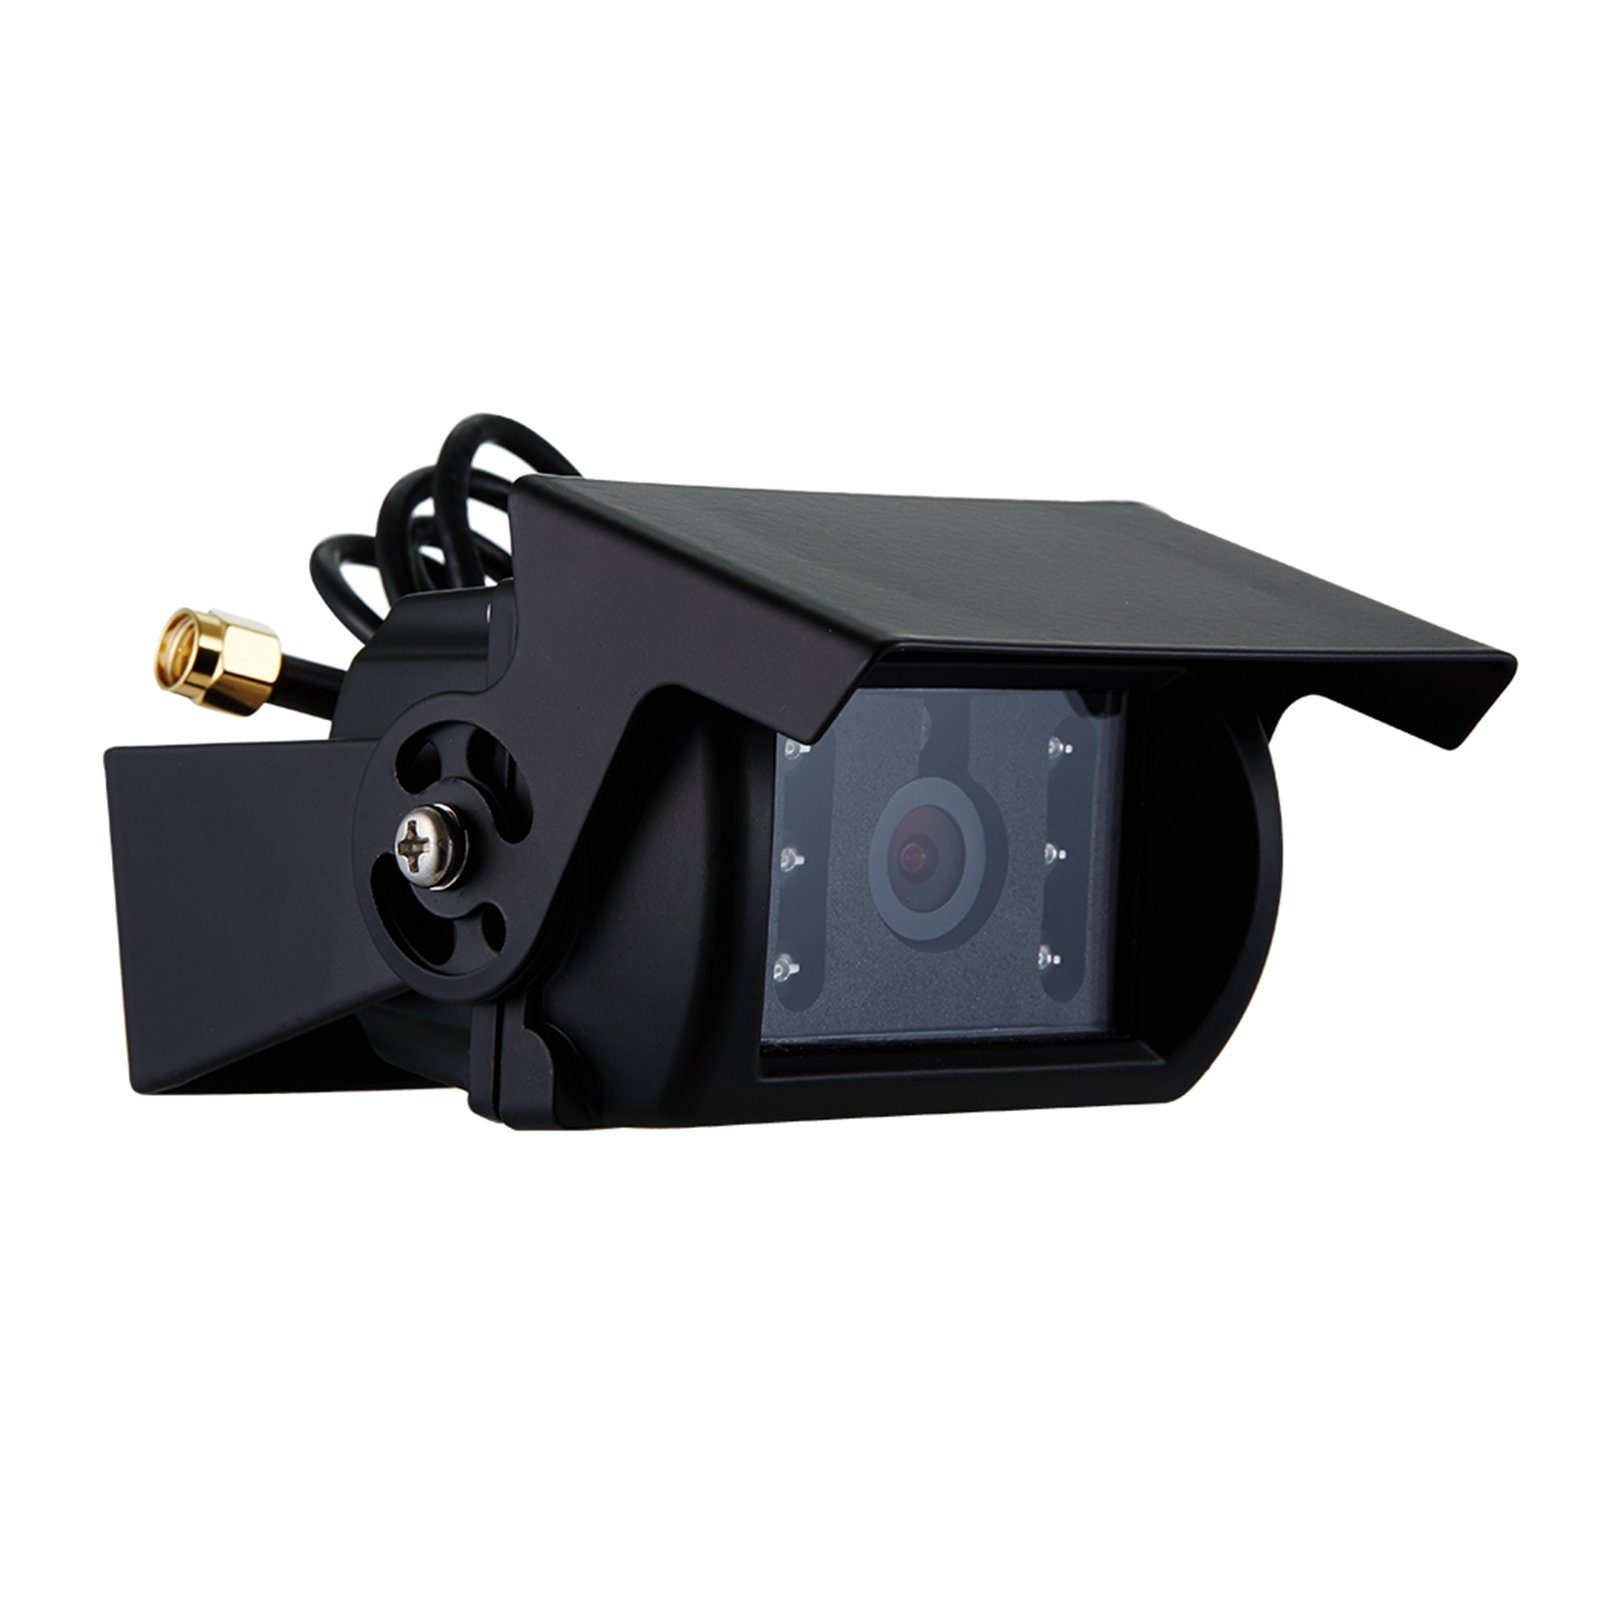 BlackVue BlackVue Hec Dashcam + Plus 256GB DR750X-2CH Truck Dashcam